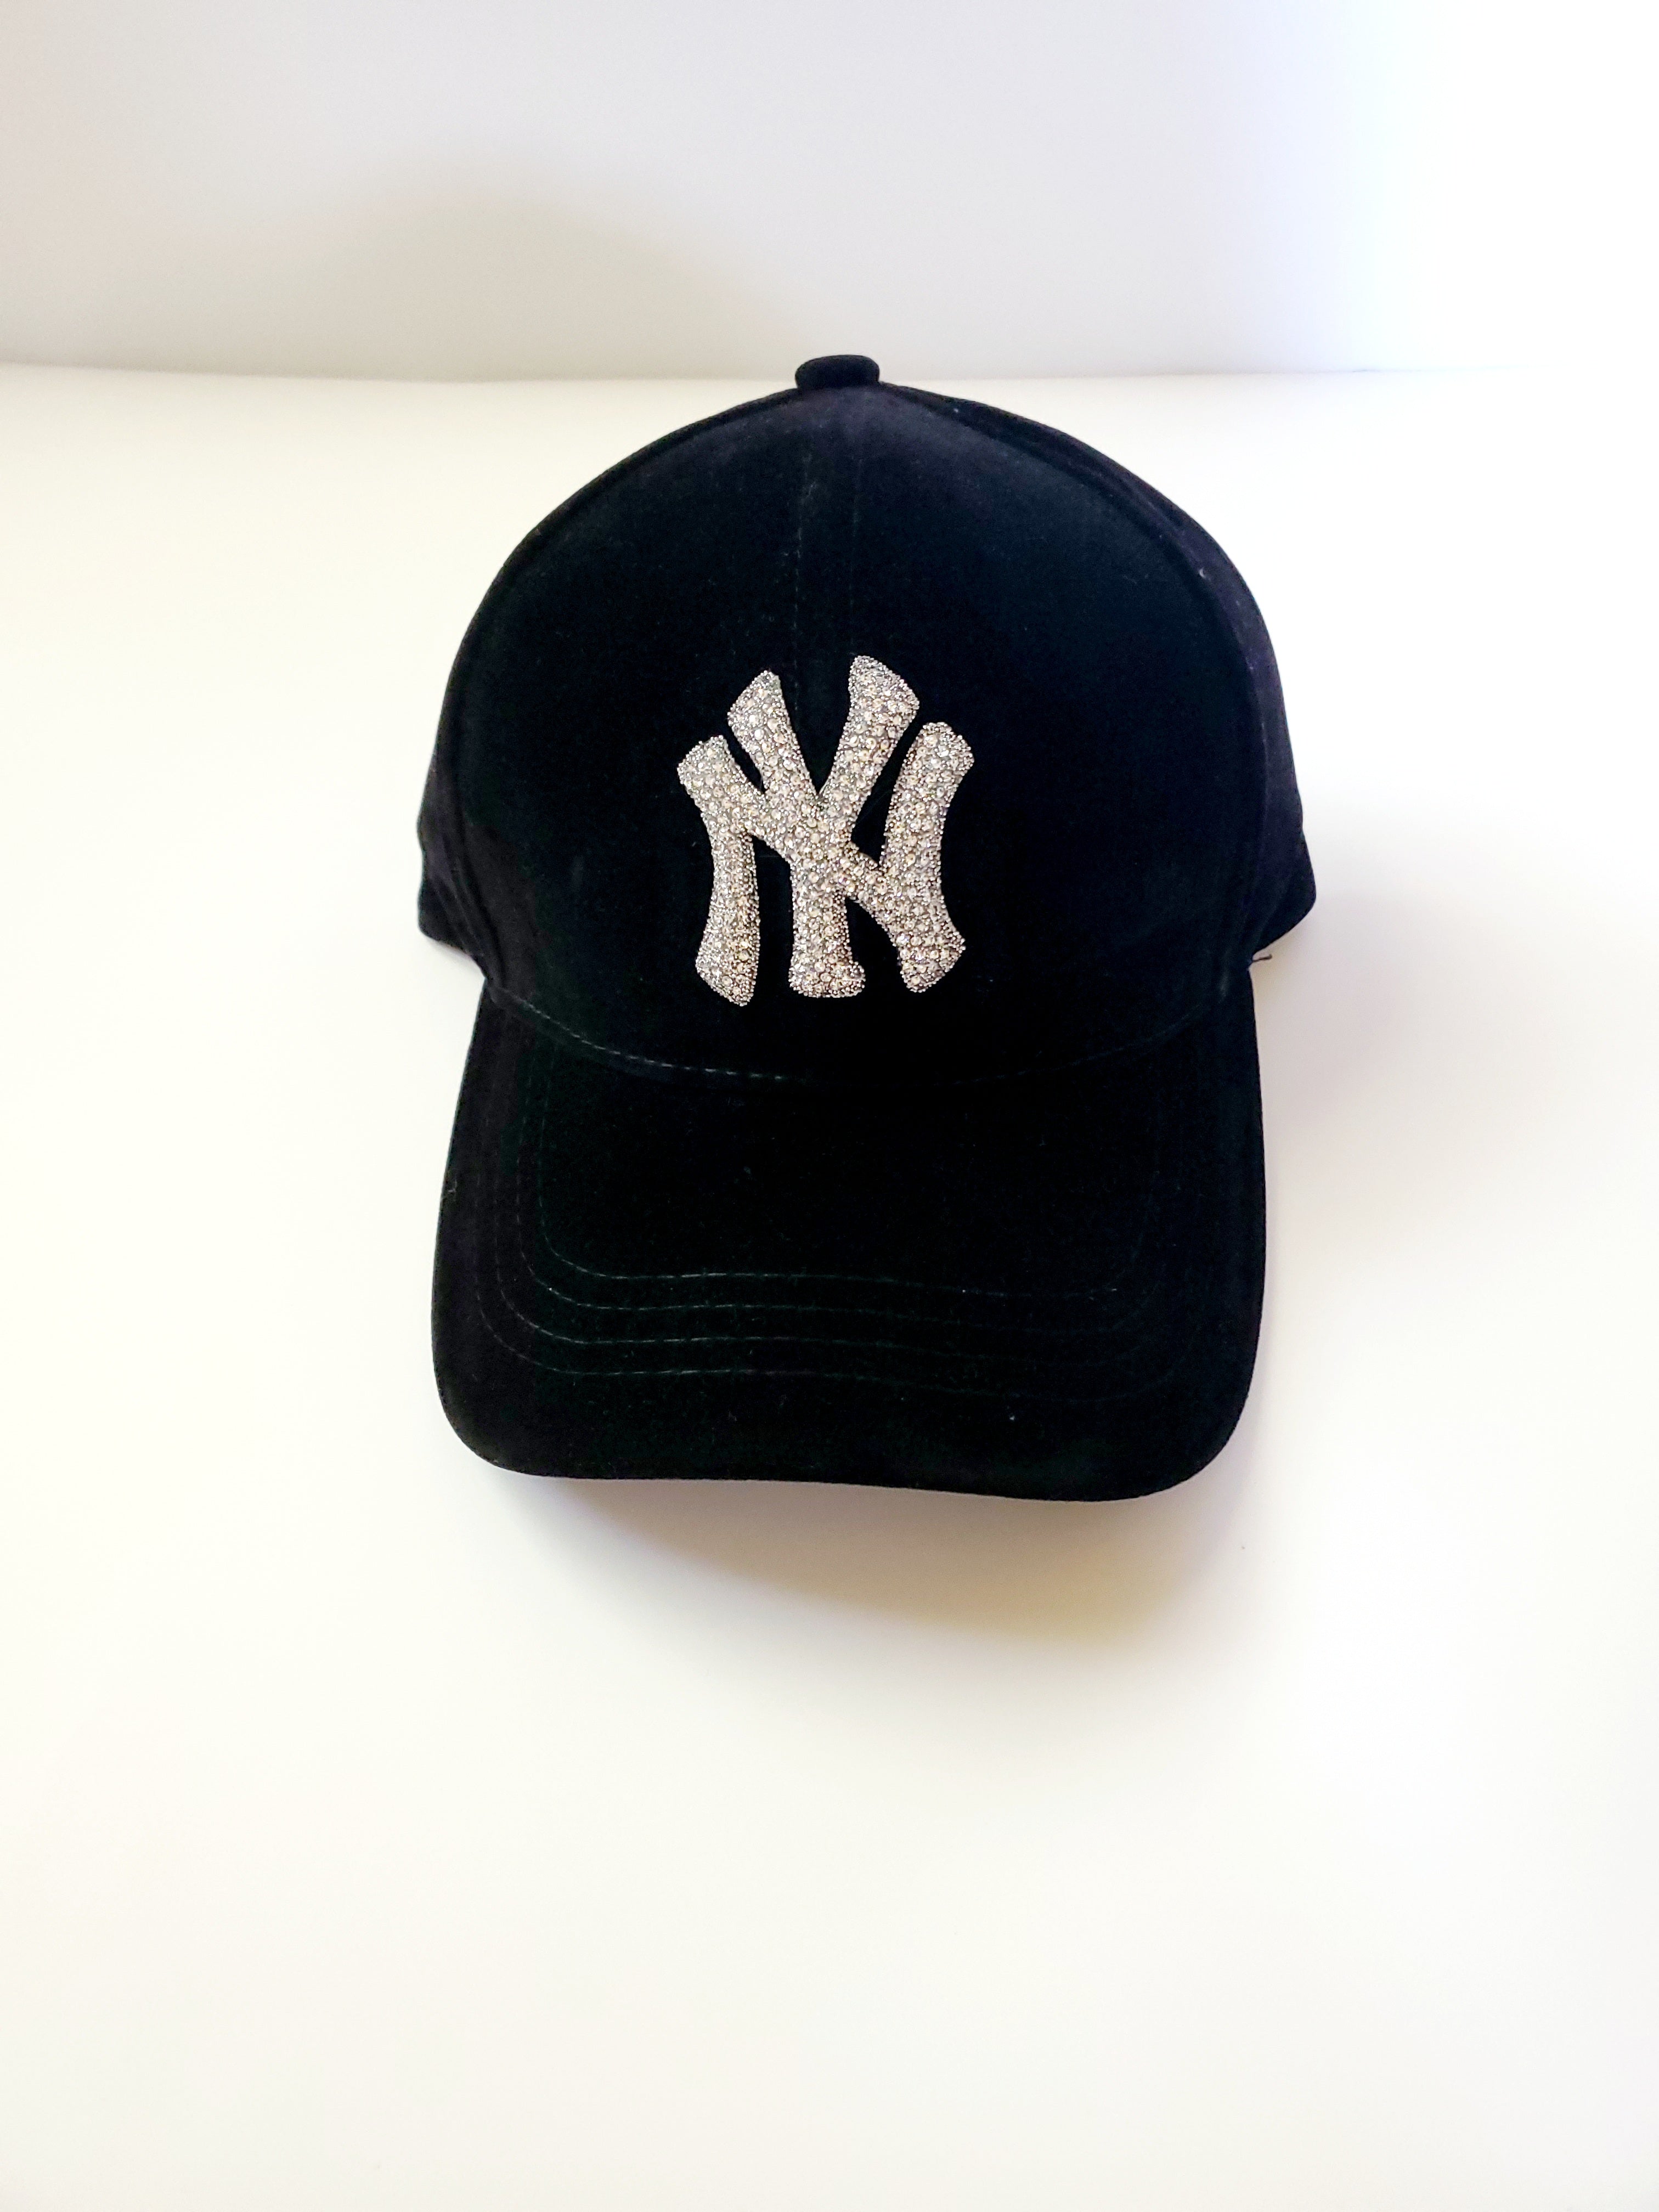 Bling New York Yankees Hat - Black – Americano Crystals